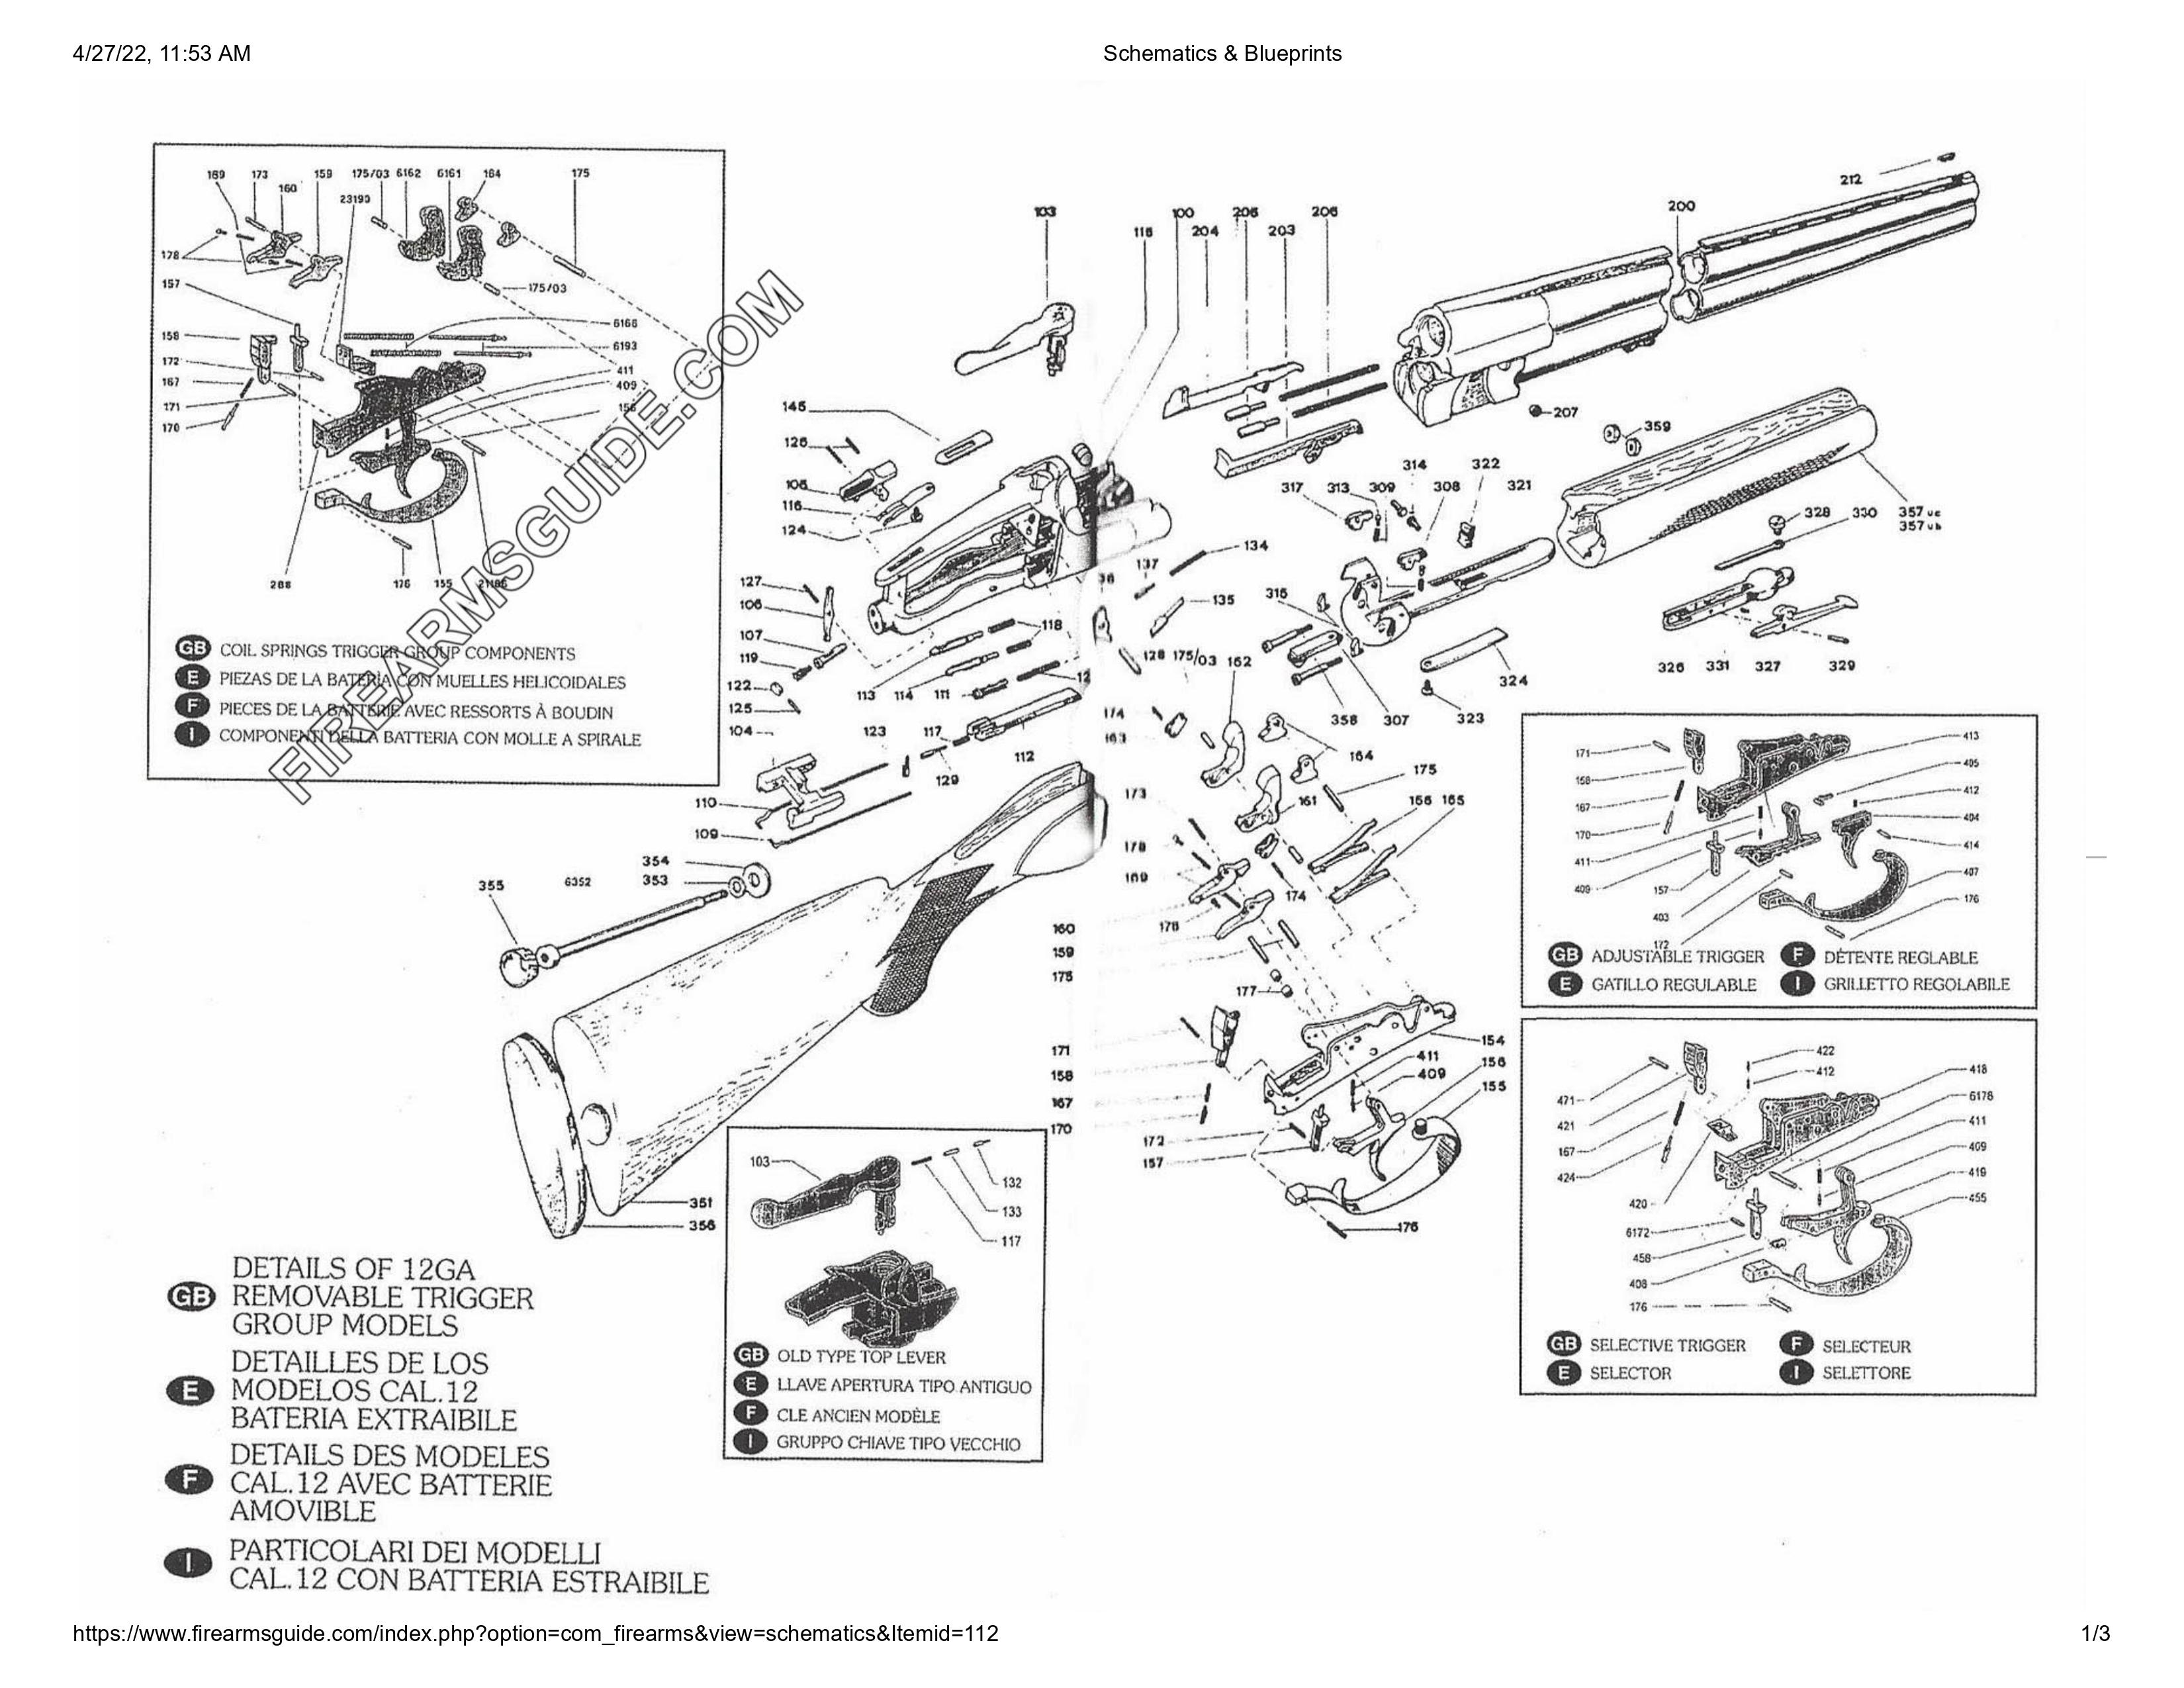 picture of perazzi shotgun parts schematic